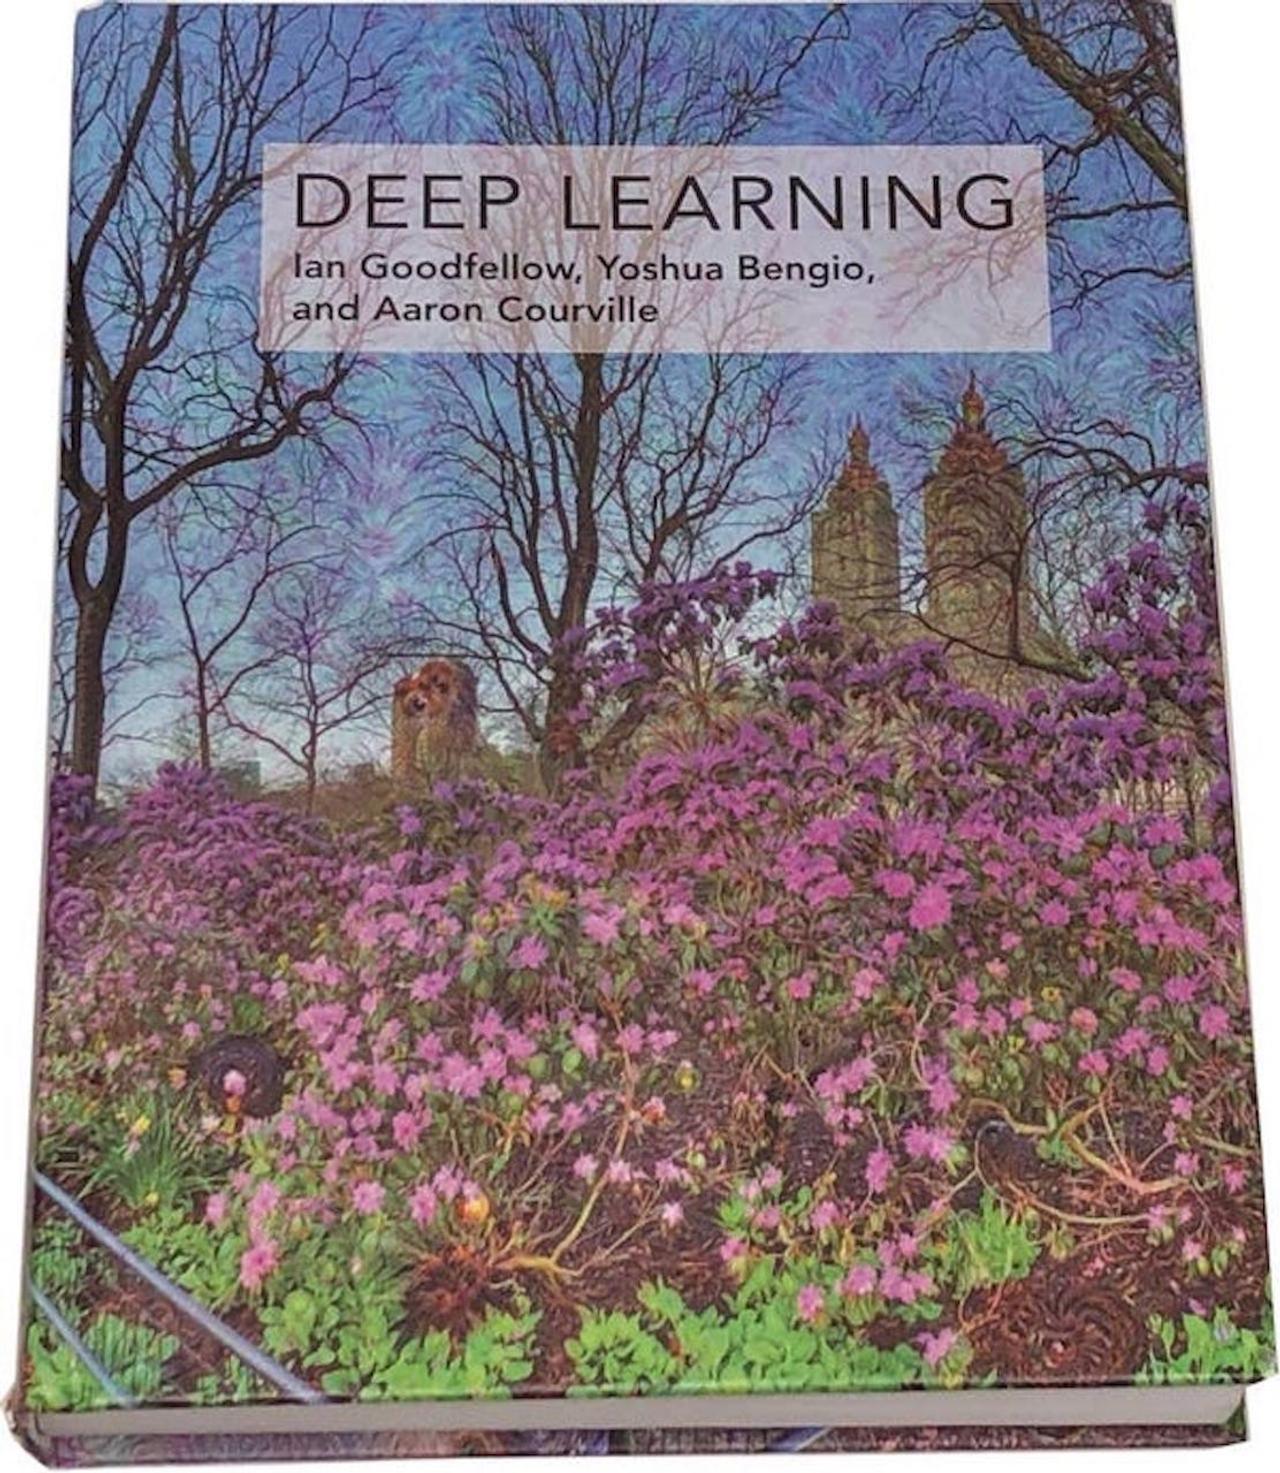 Ian Goodfellow, Joshua Bengio, Aaron Carville, Deep Learning